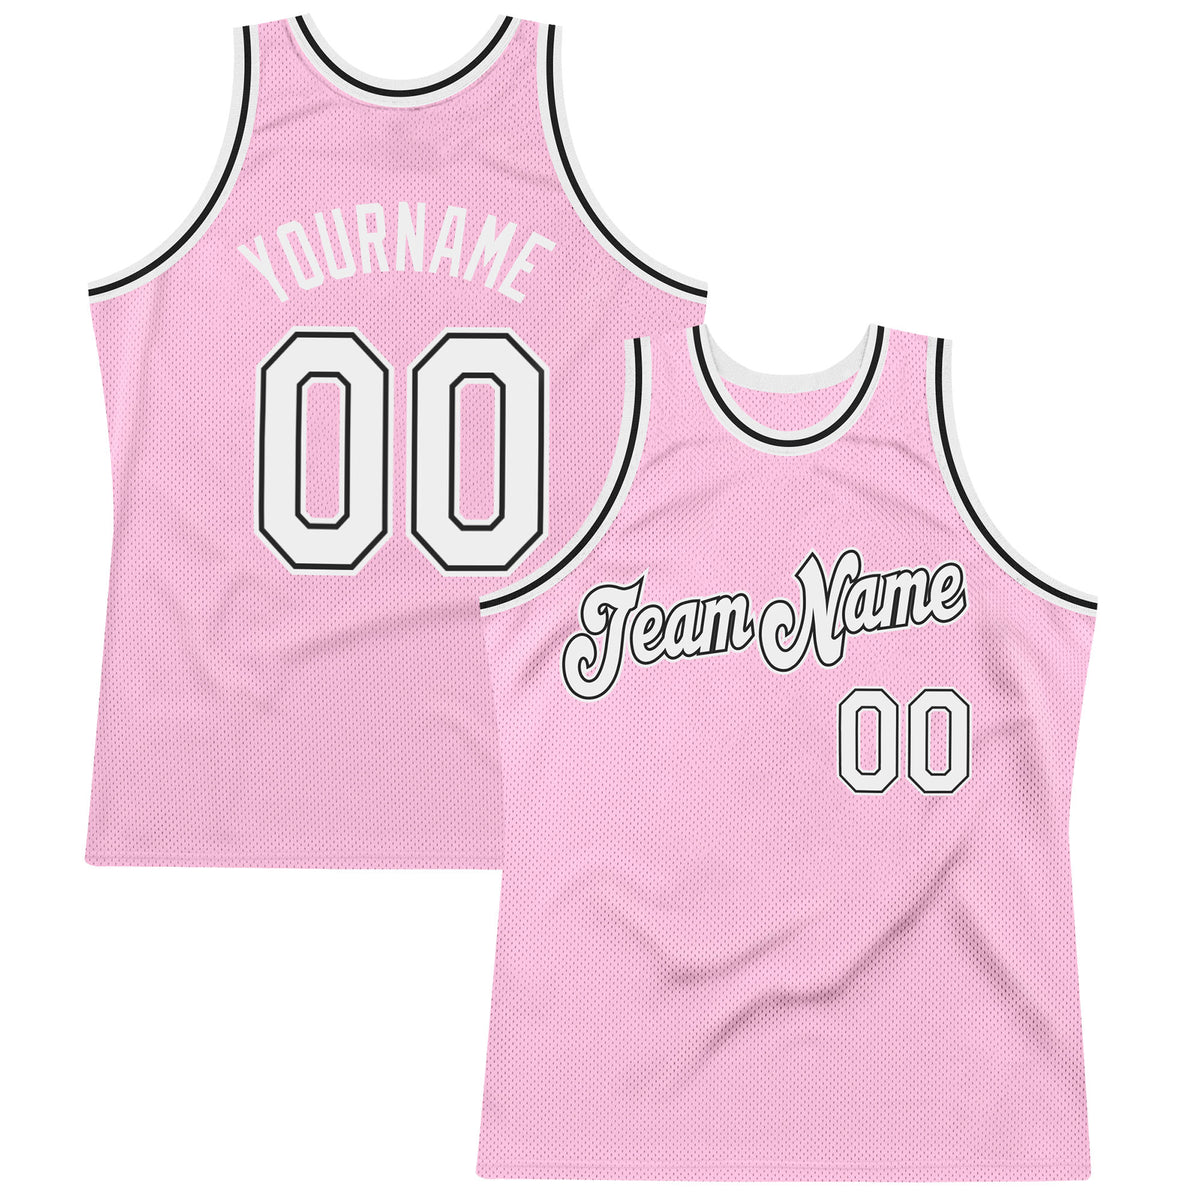 Cheap Custom Light Pink White-Black Authentic Throwback Basketball Jersey  Free Shipping – CustomJerseysPro